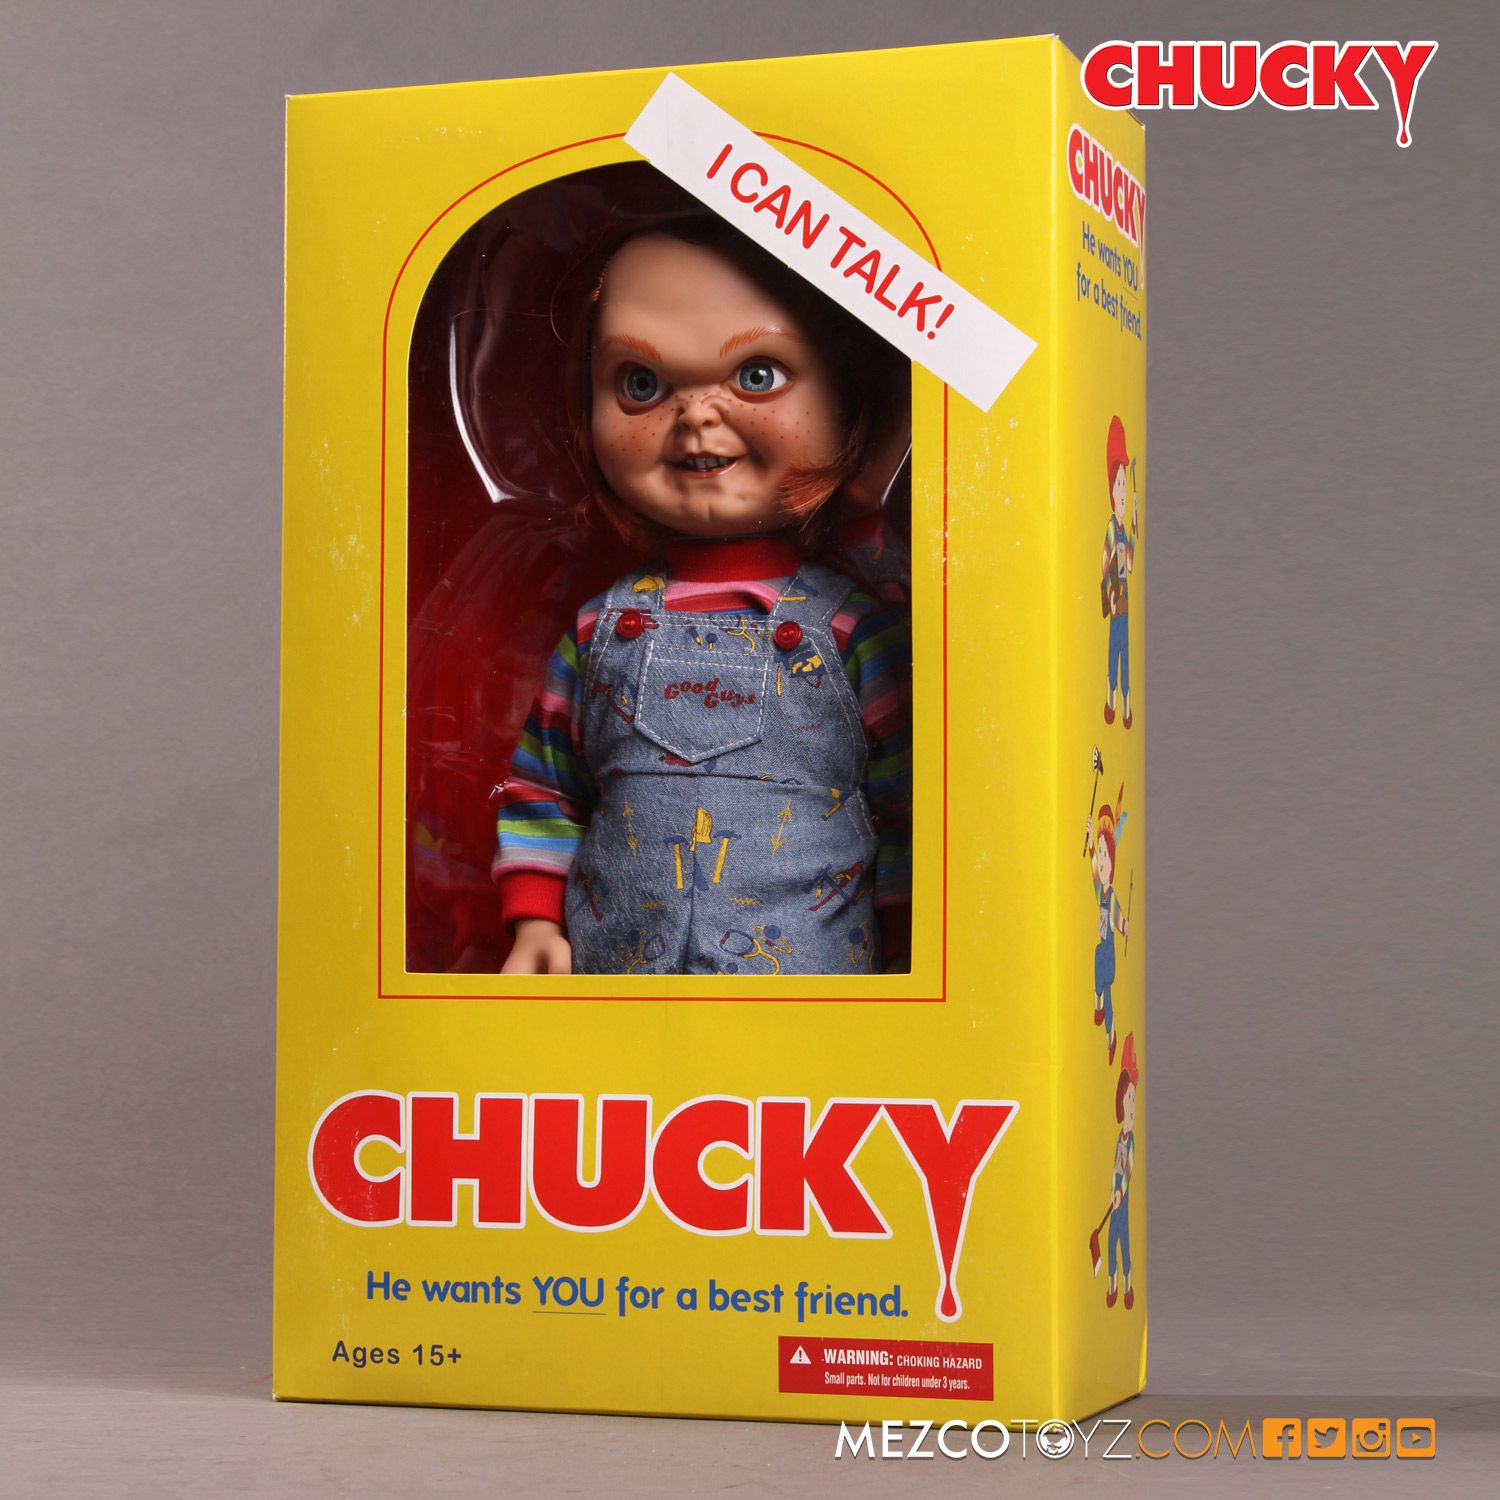 Chucky Child's Play: Talking Sneering Chucky